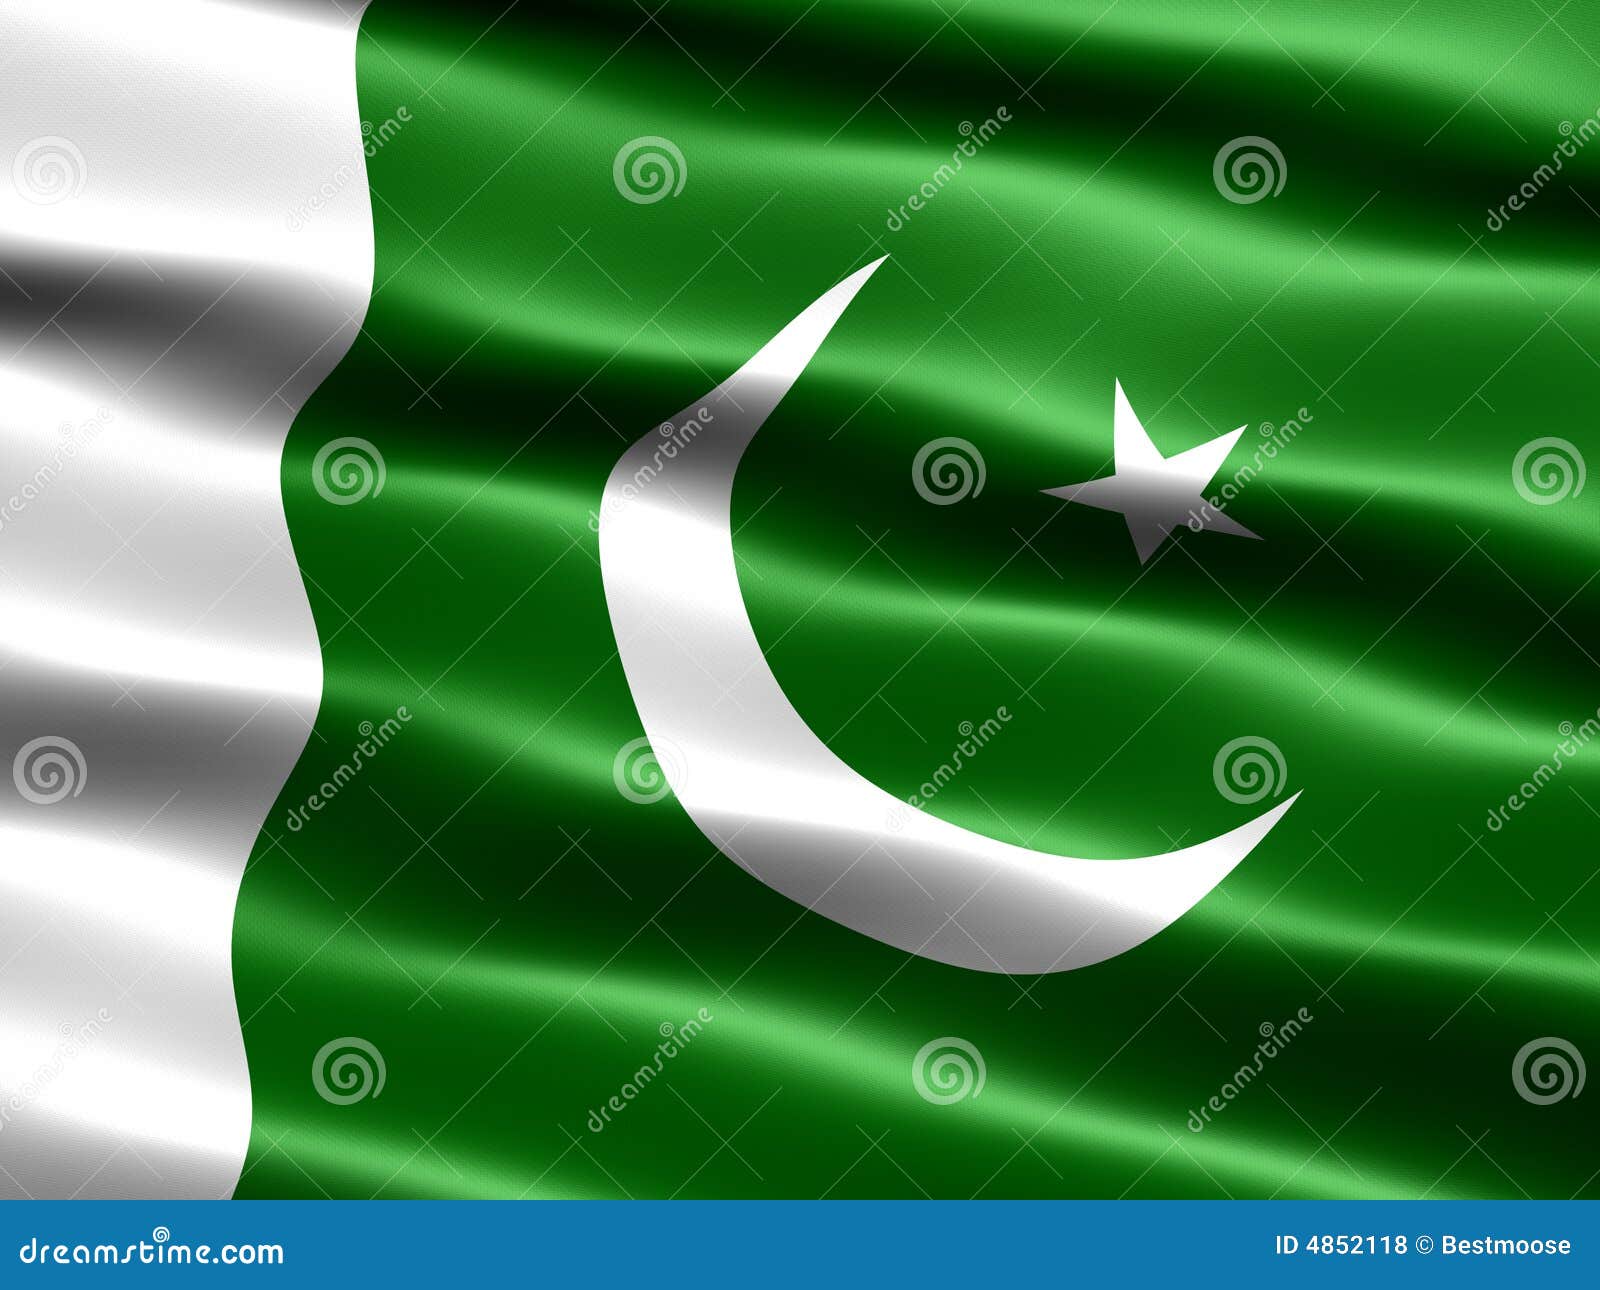 clipart pakistan flag - photo #36